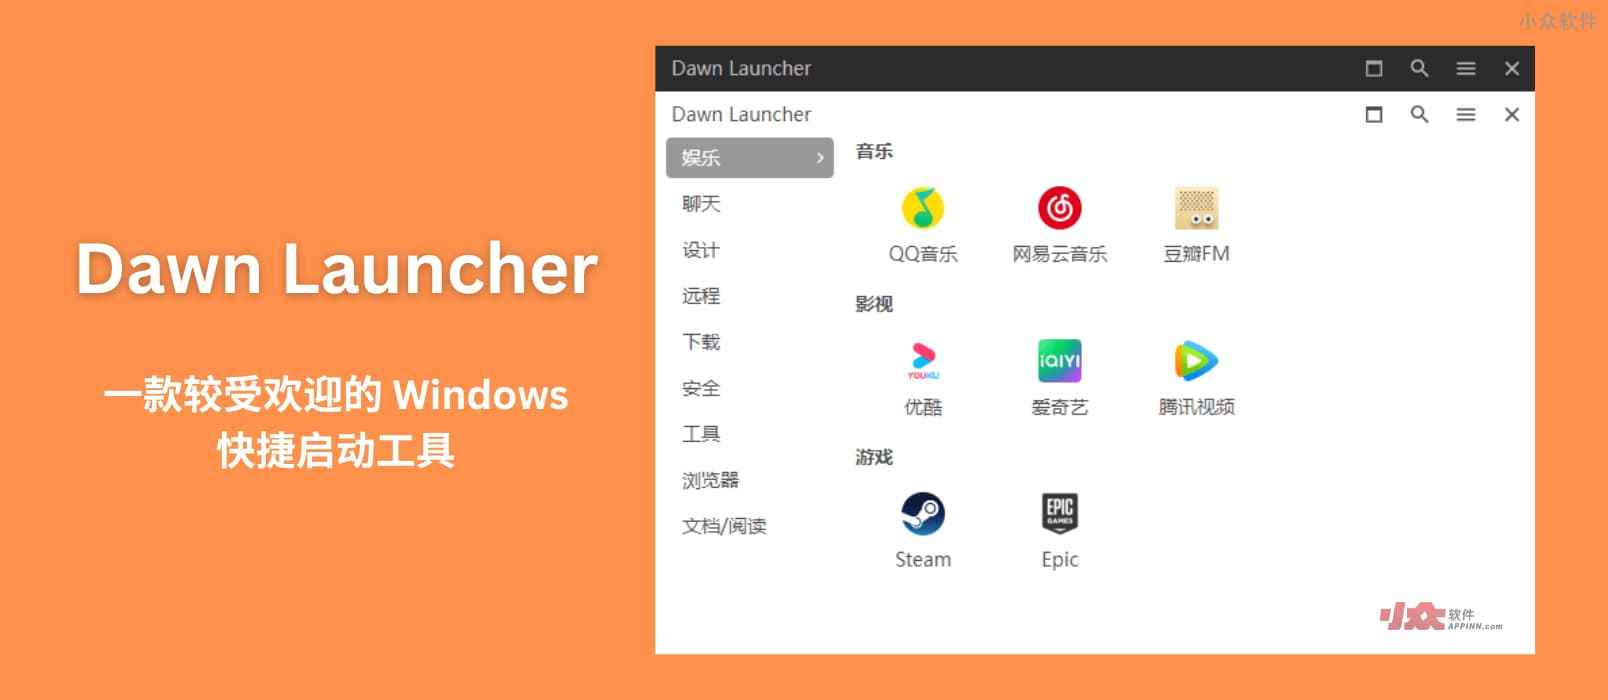 Dawn Launcher – 一款较受欢迎的 Windows 快捷启动工具